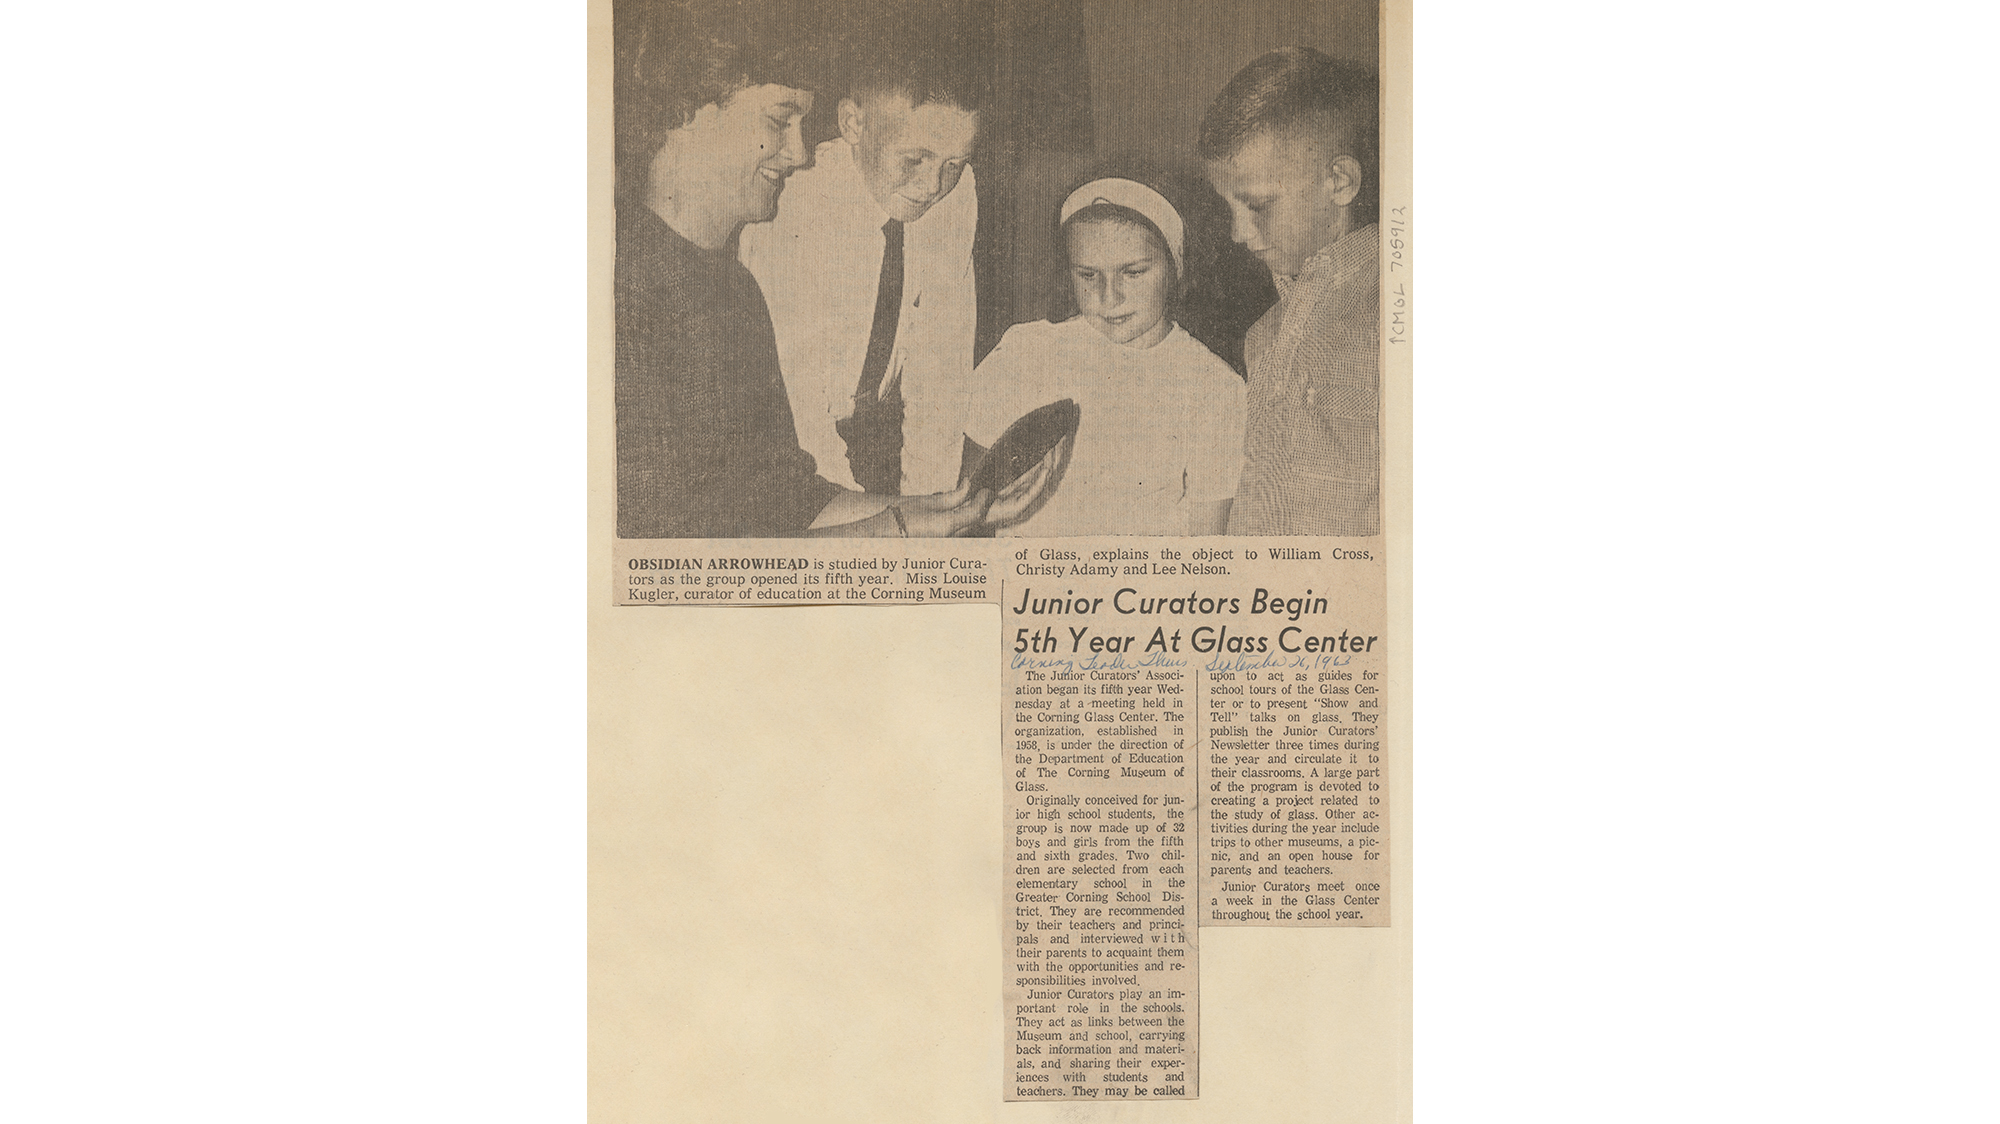 ‘Junior Curators Begin 5th Year at Glass Center,’ Corning Leader,  September 26, 1963, Corning Museum of Glass Education Department Junior Curators Program Records, CMOG RG10 S05